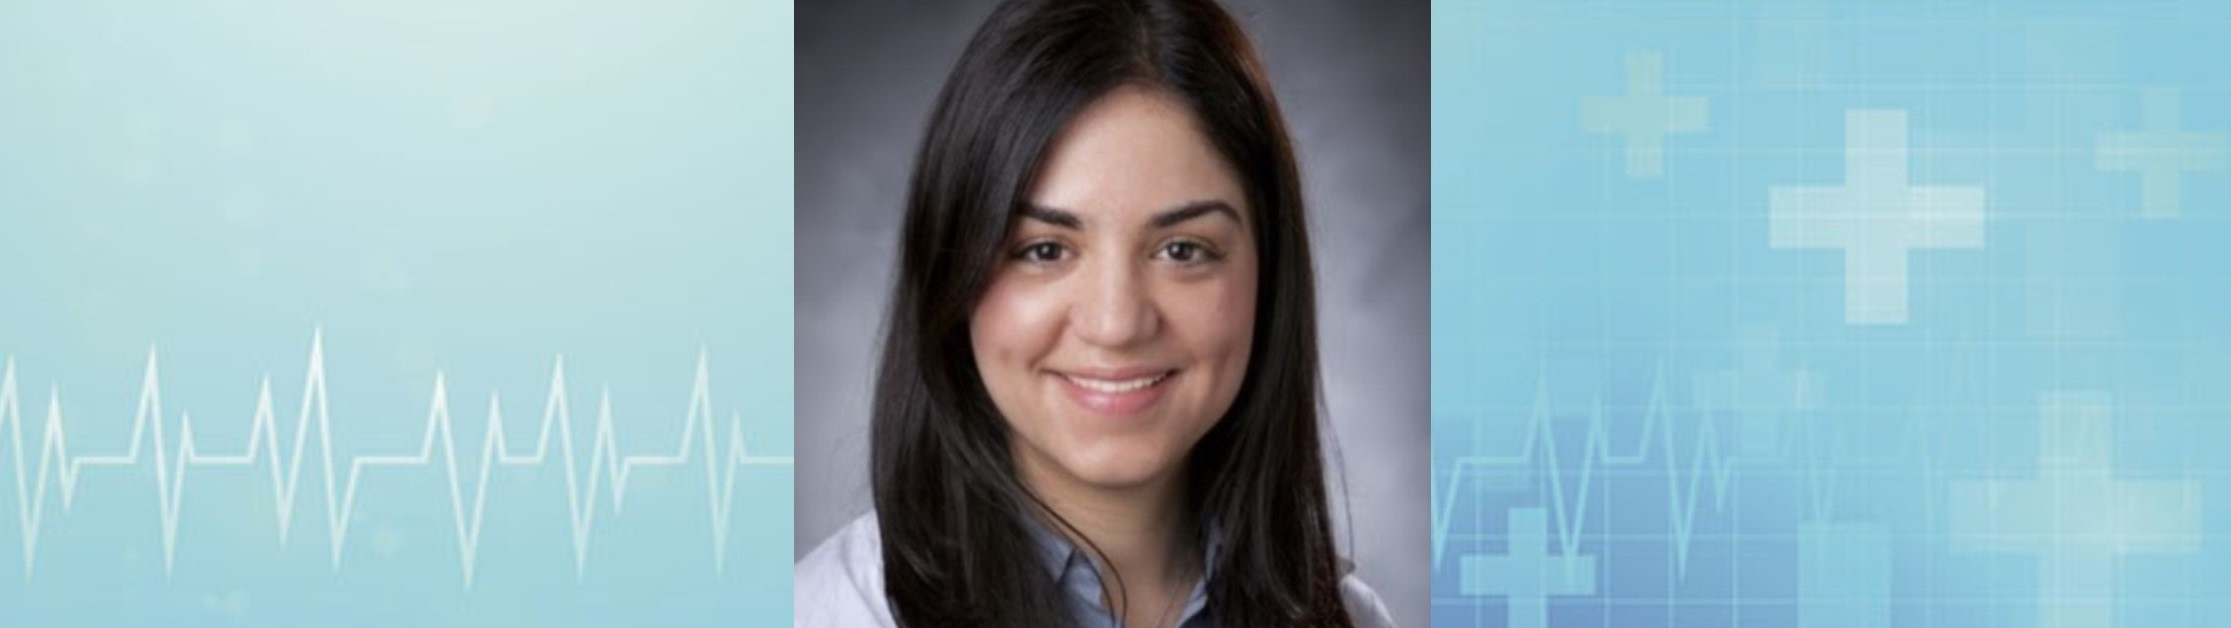 Sara Ahmadi, MD